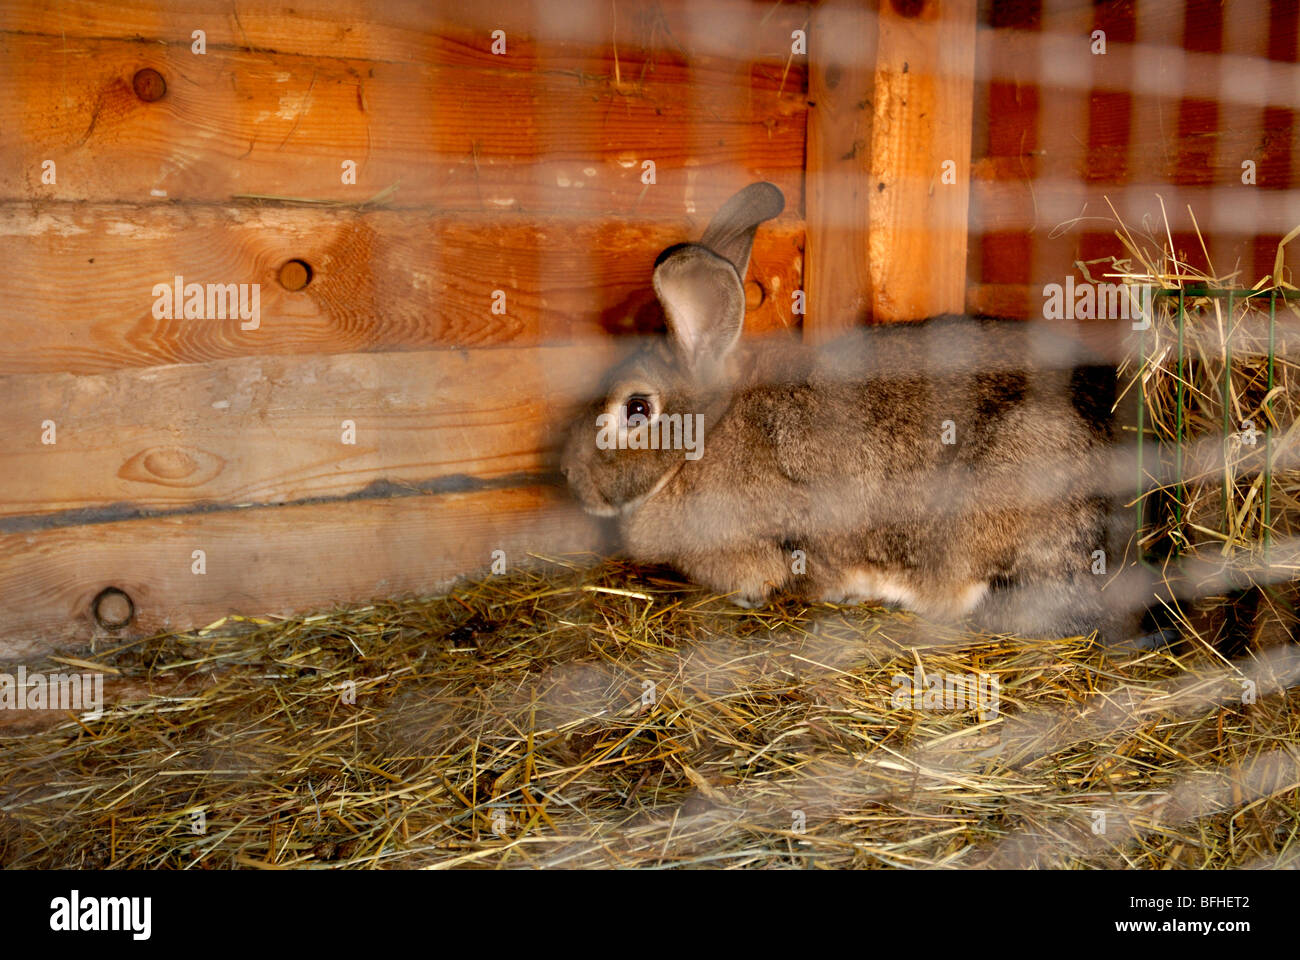 Rabbit in rabbit hutch Stock Photo